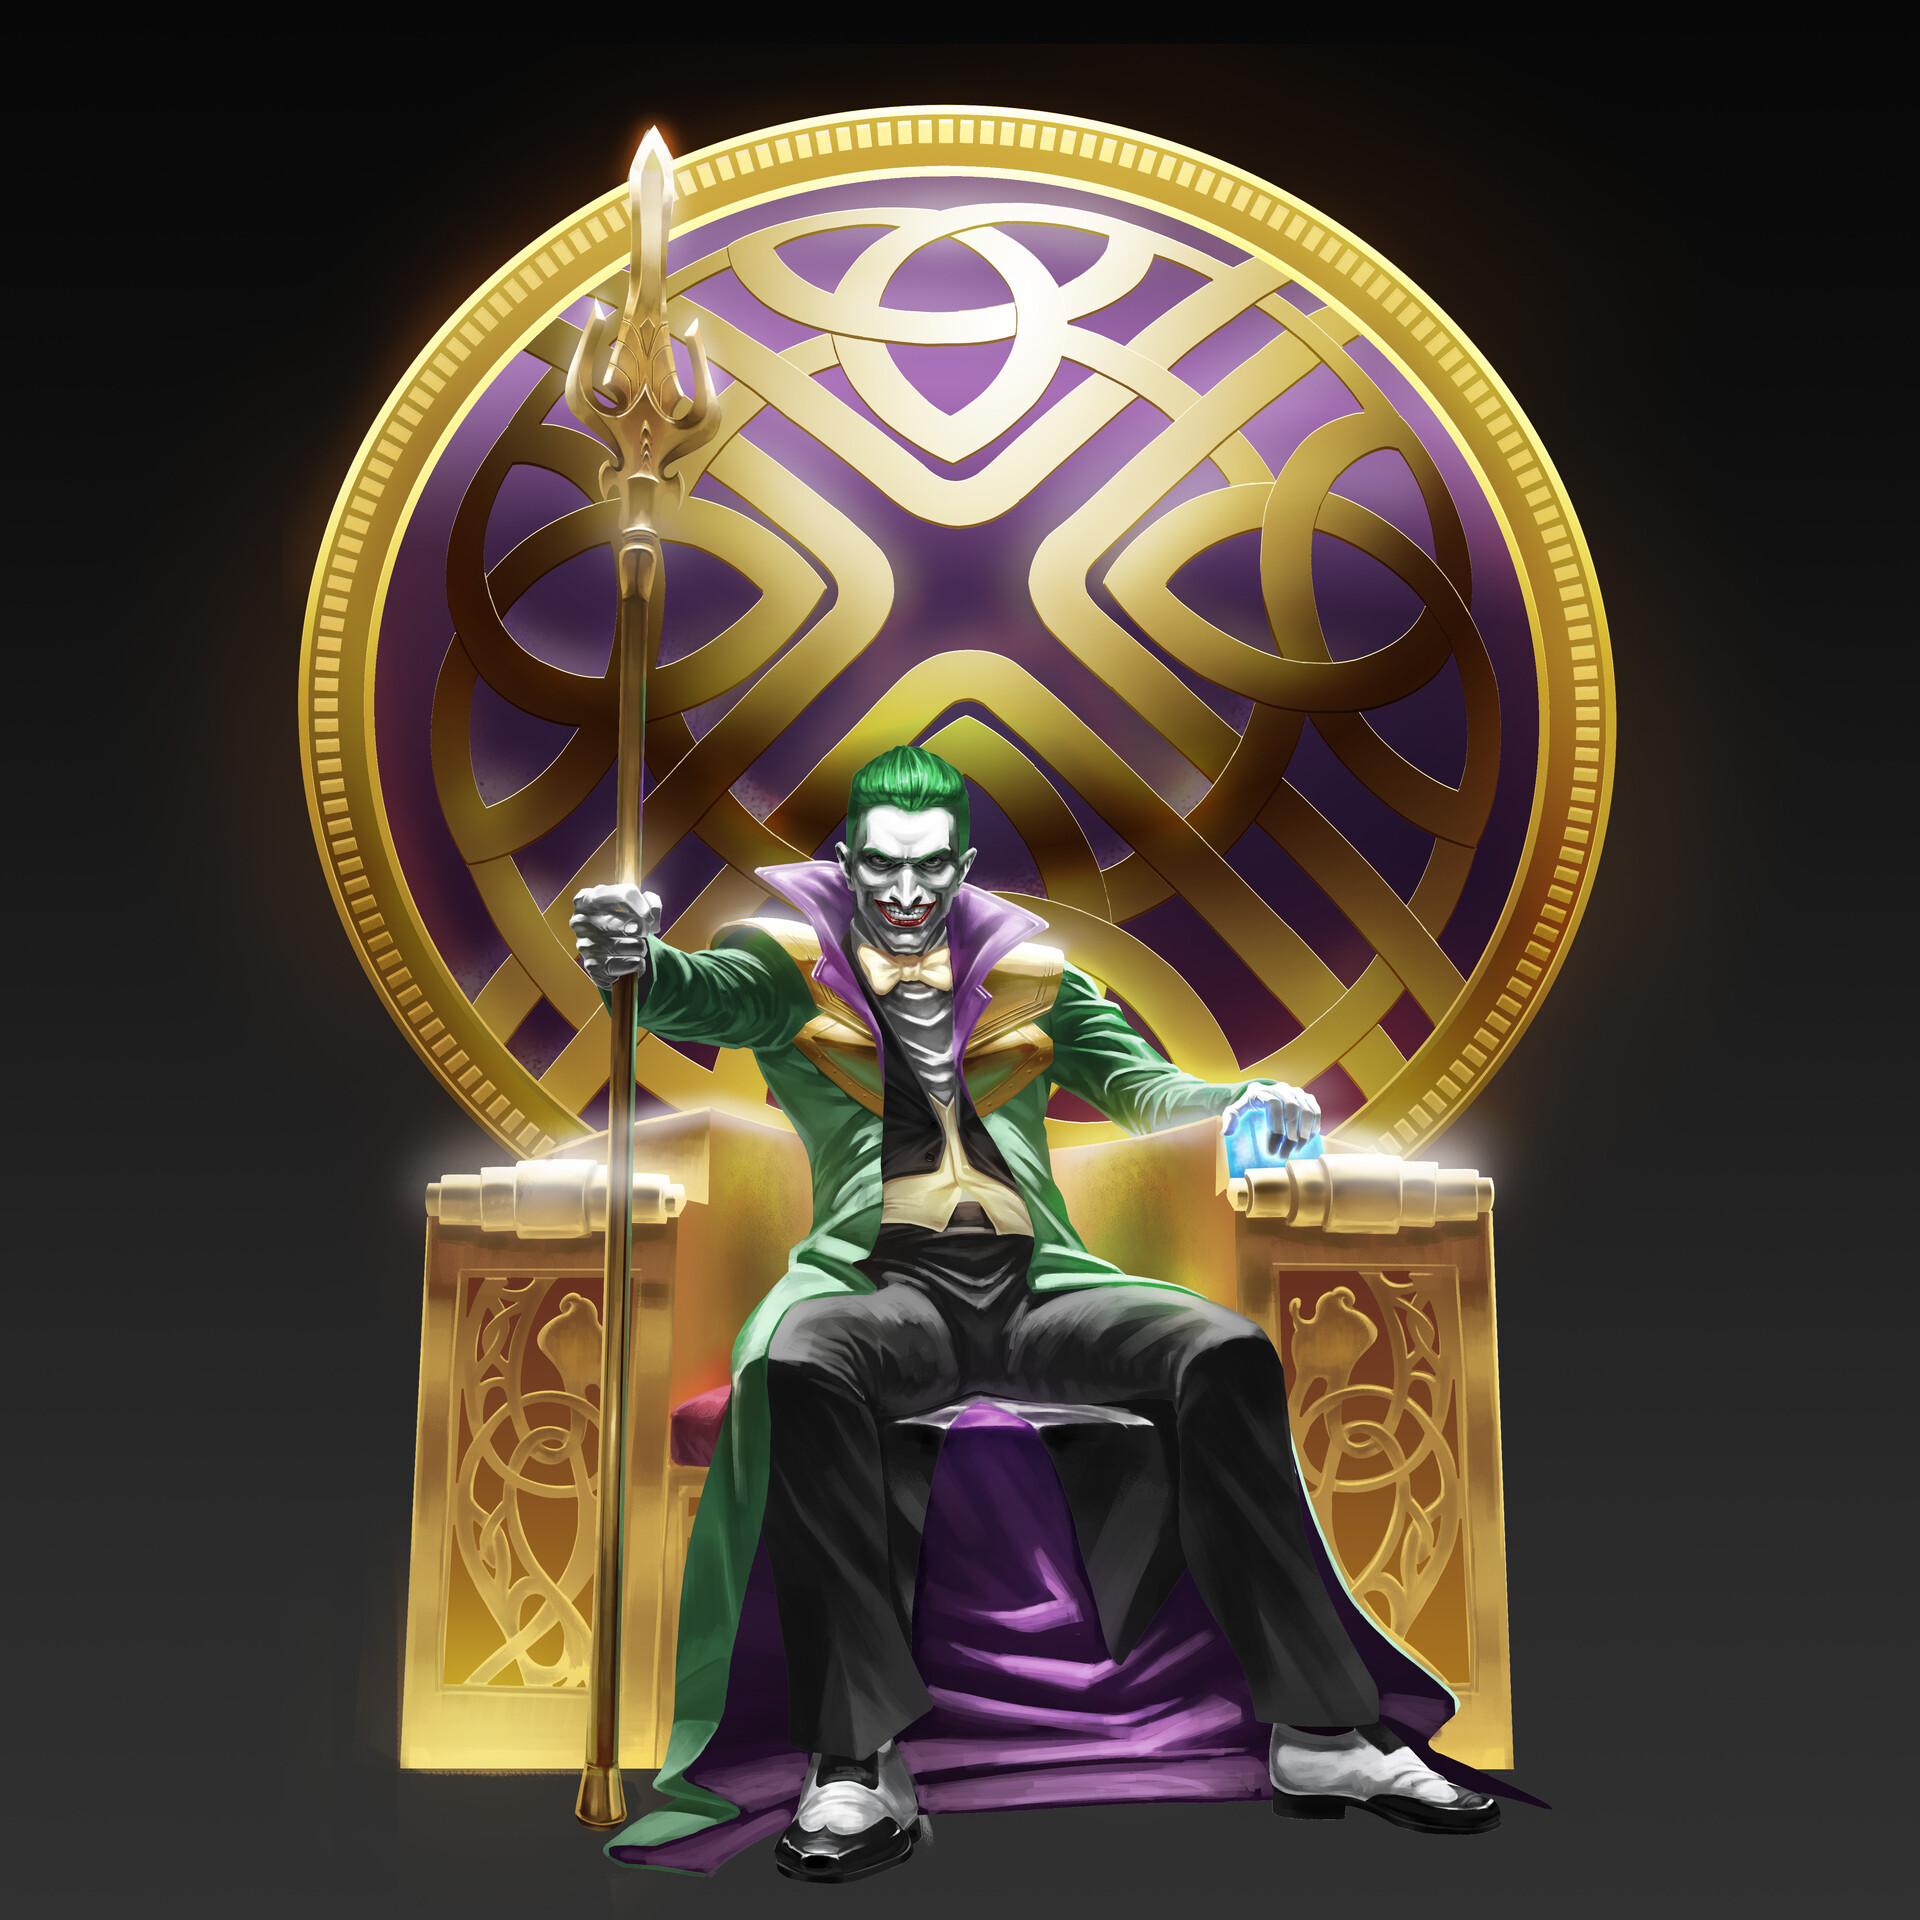 Joker and Loki character sitting on his throne